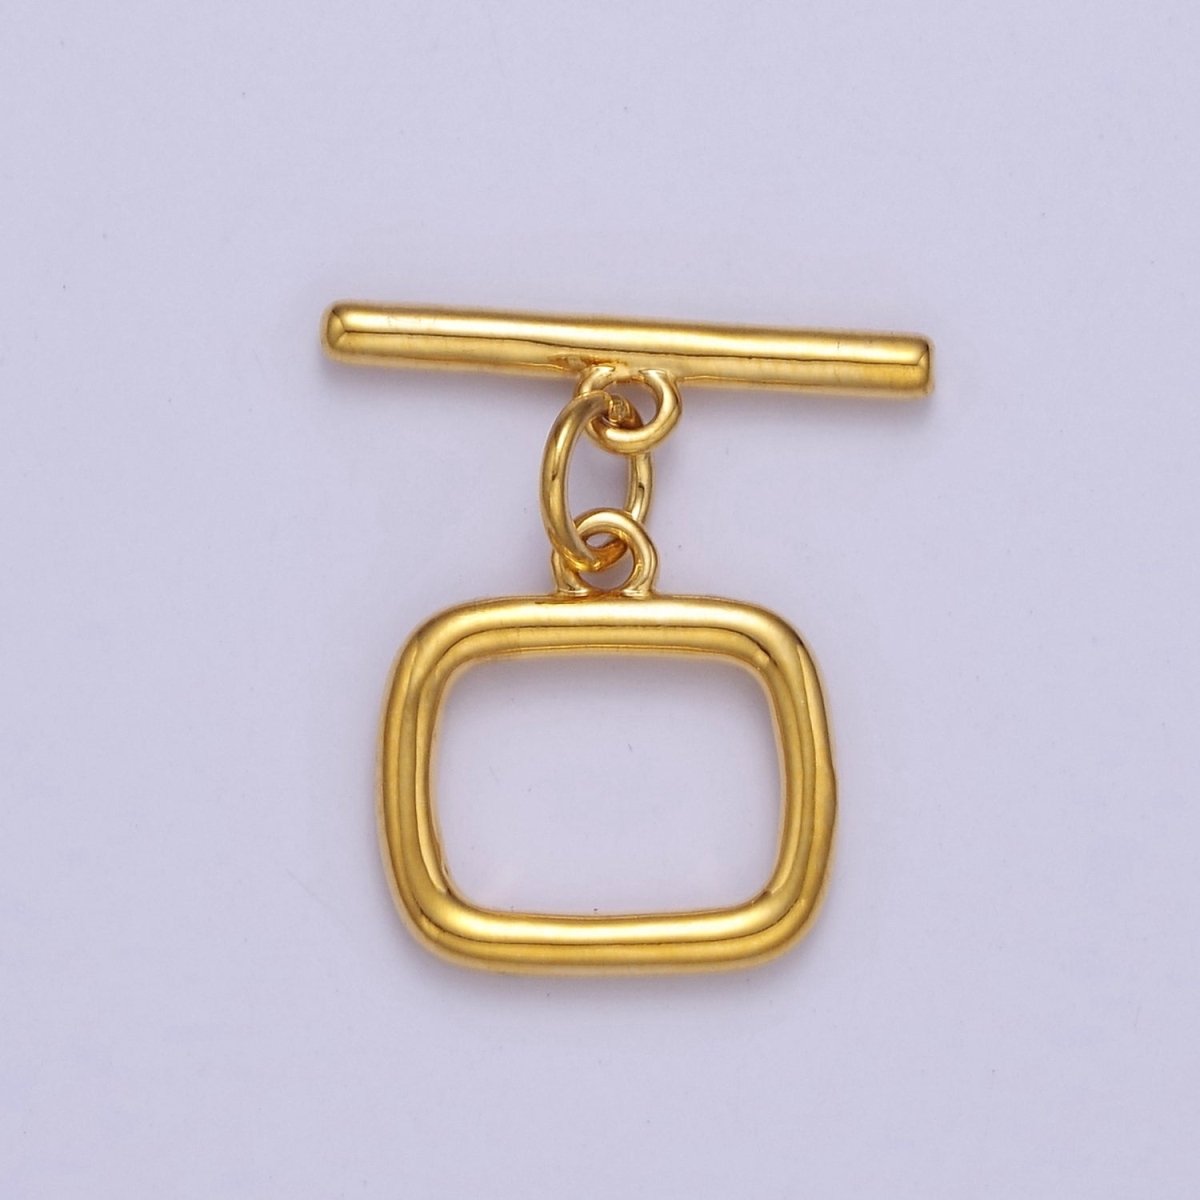 24K Gold Filled Square Toggle Clasp, Jewelry Clasp OT Clasp Findings L-717 L-718 L-722 - DLUXCA